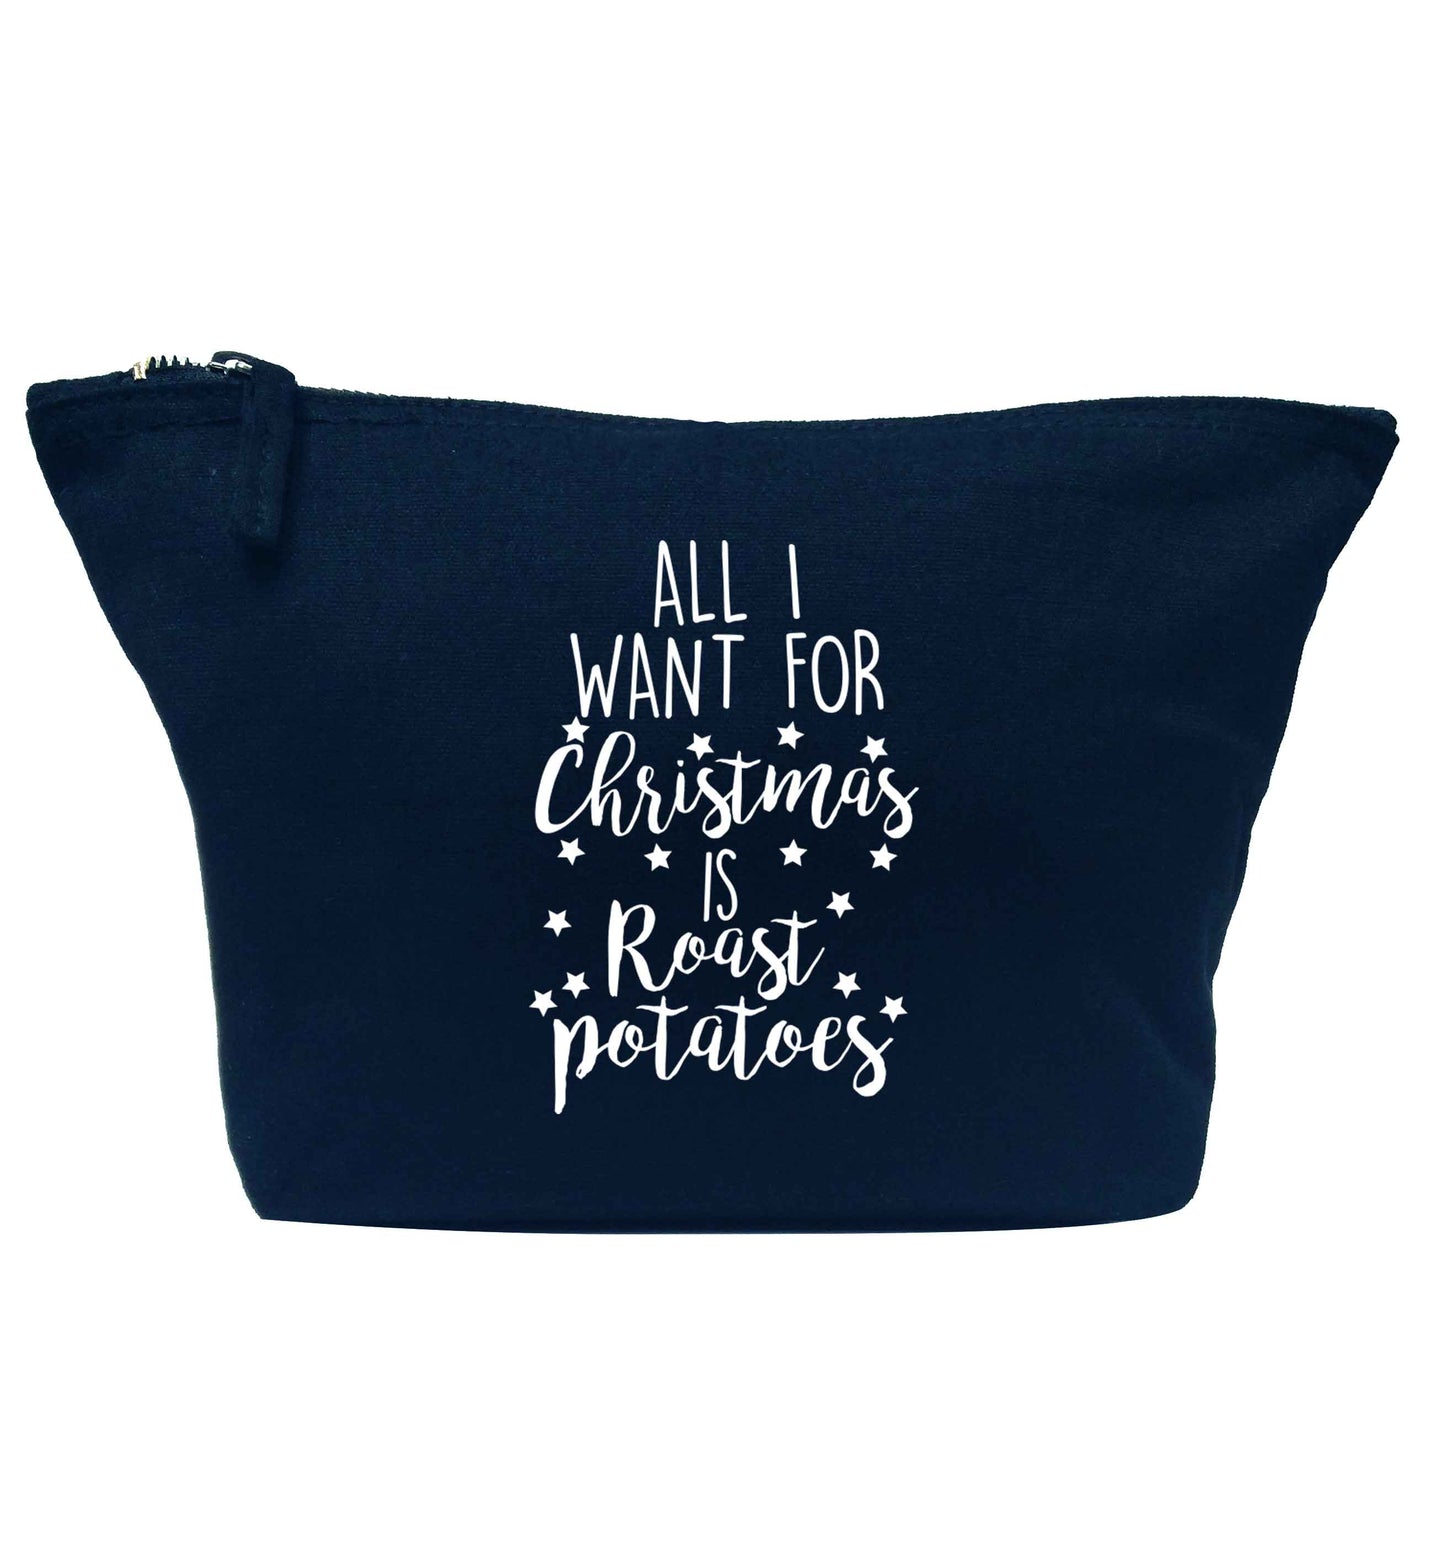 All I want for Christmas is roast potatoes navy makeup bag